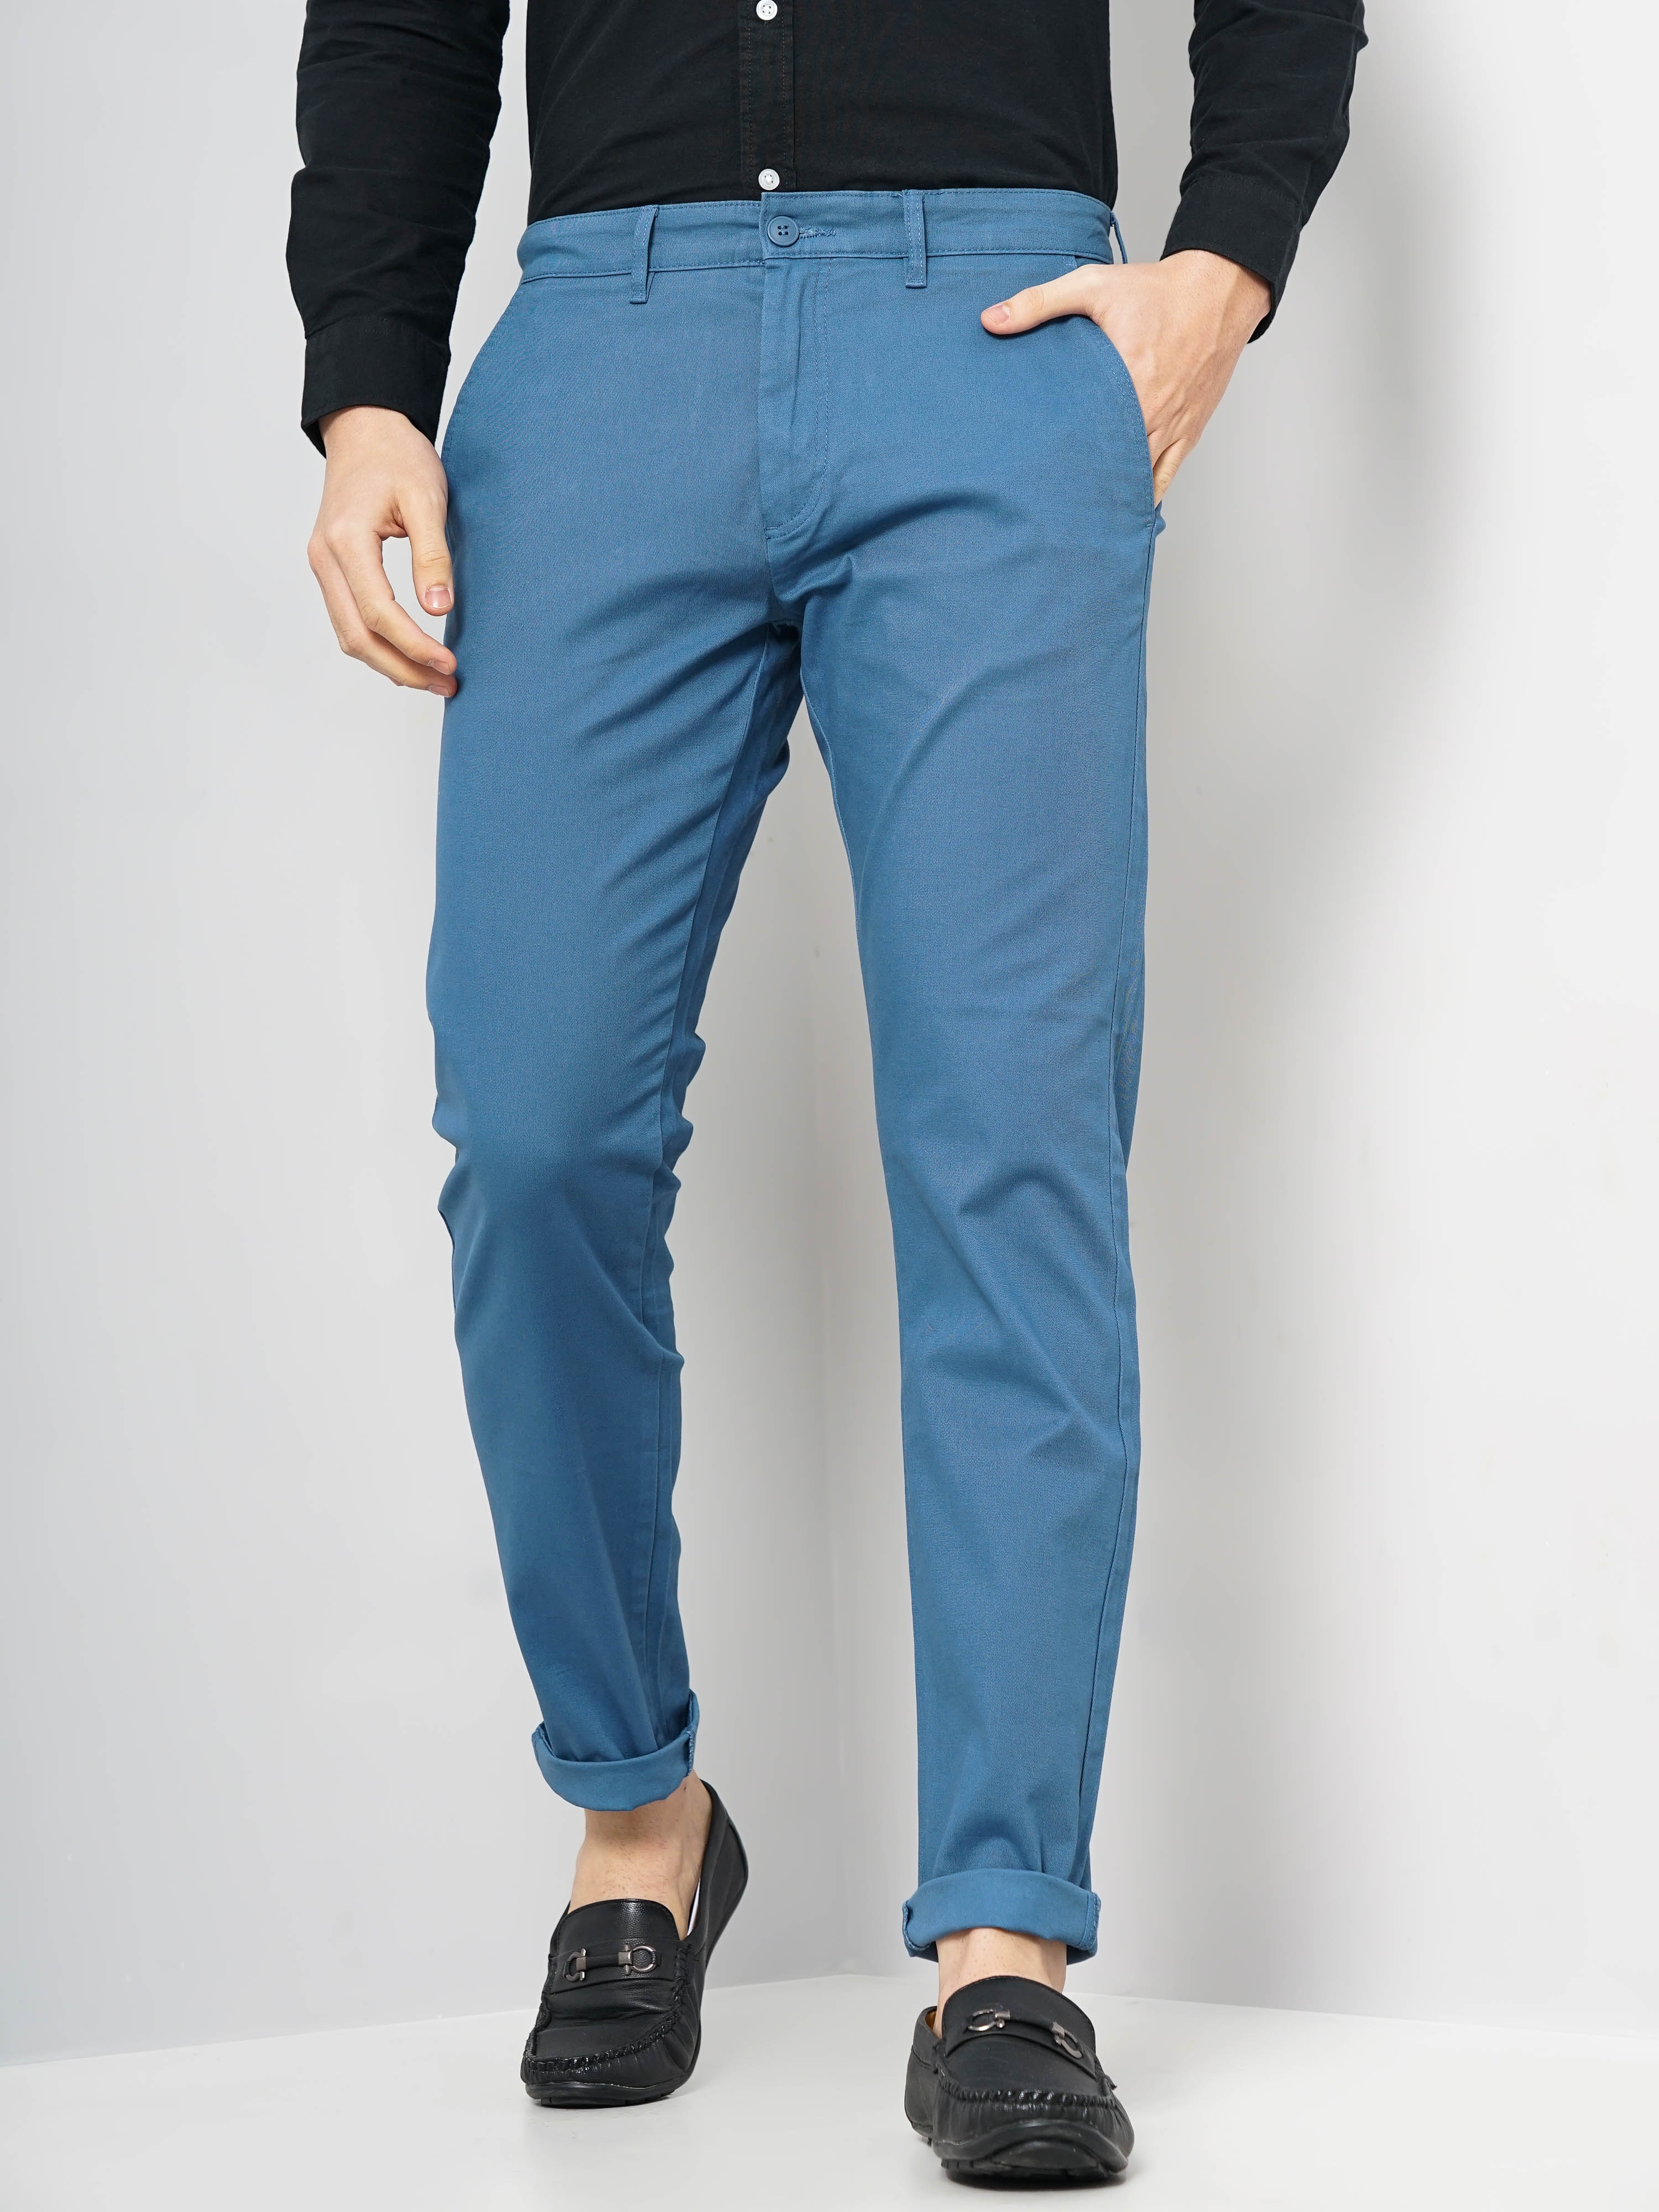 Cyan blue slim fit chino pants